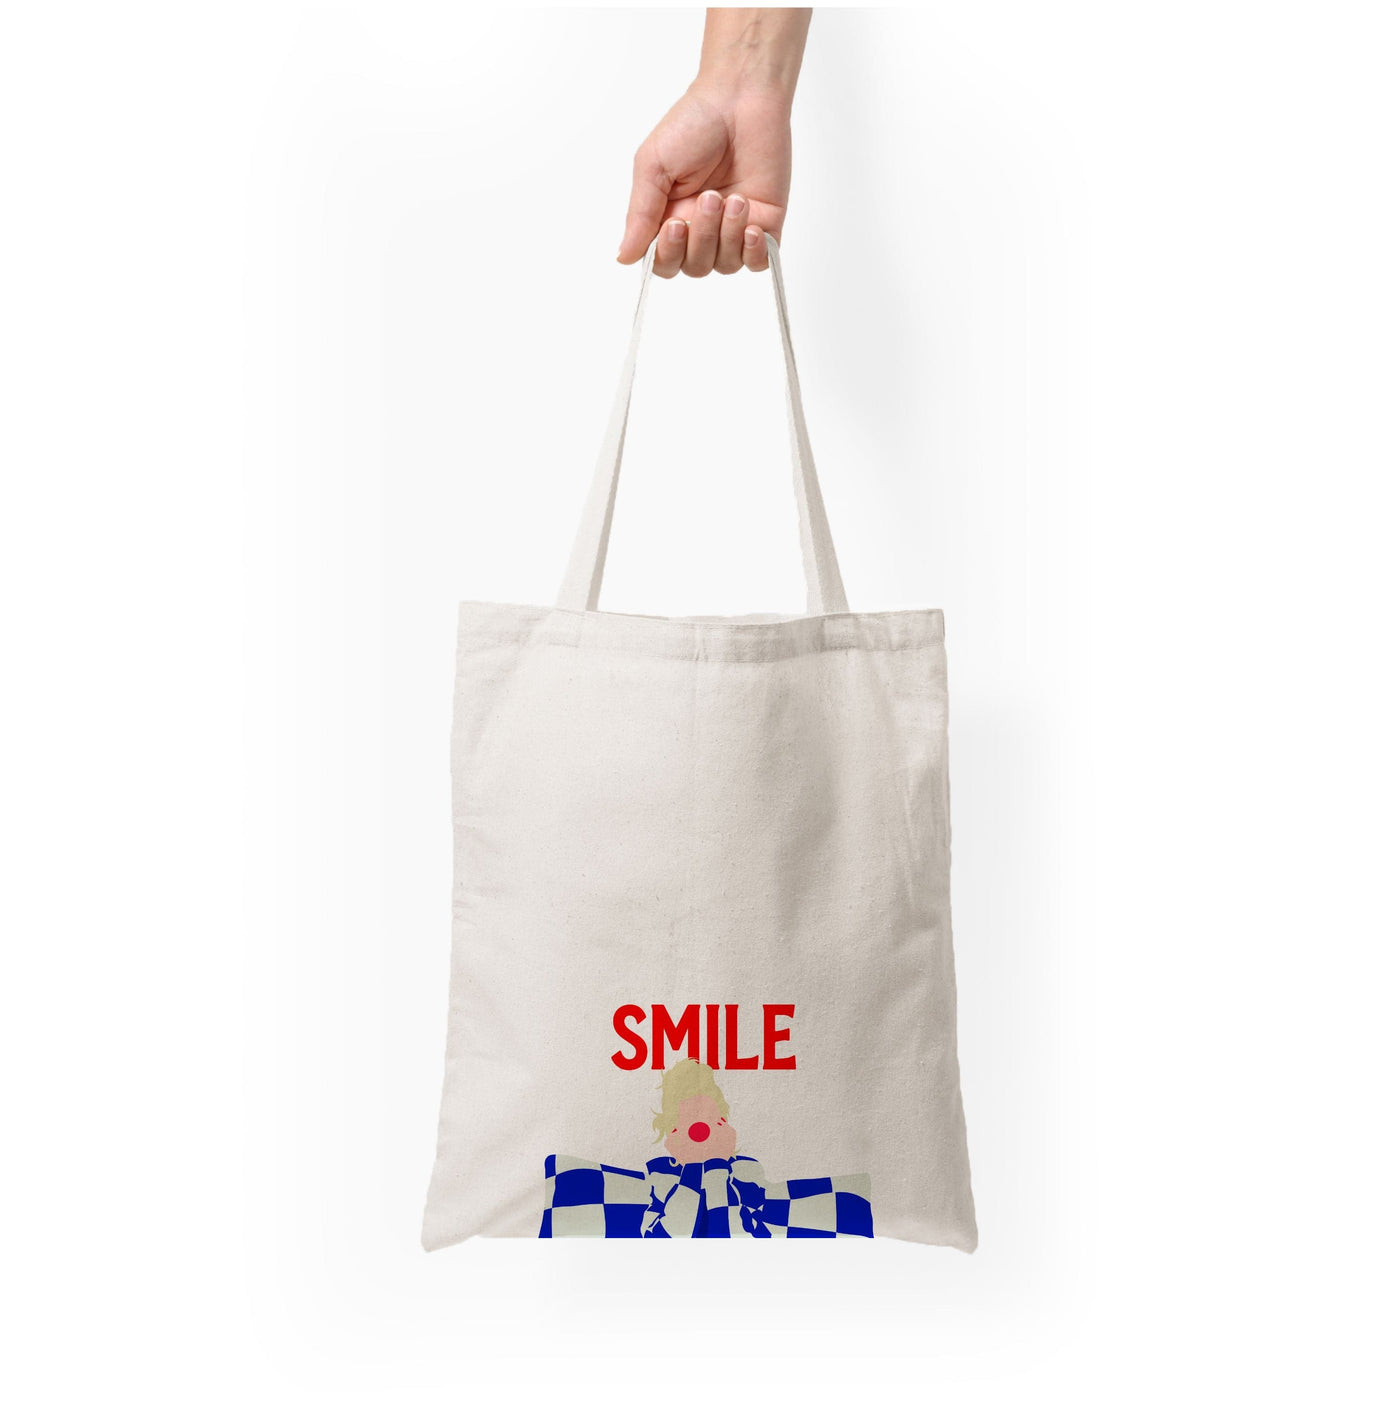 Smile - Katy Perry Tote Bag